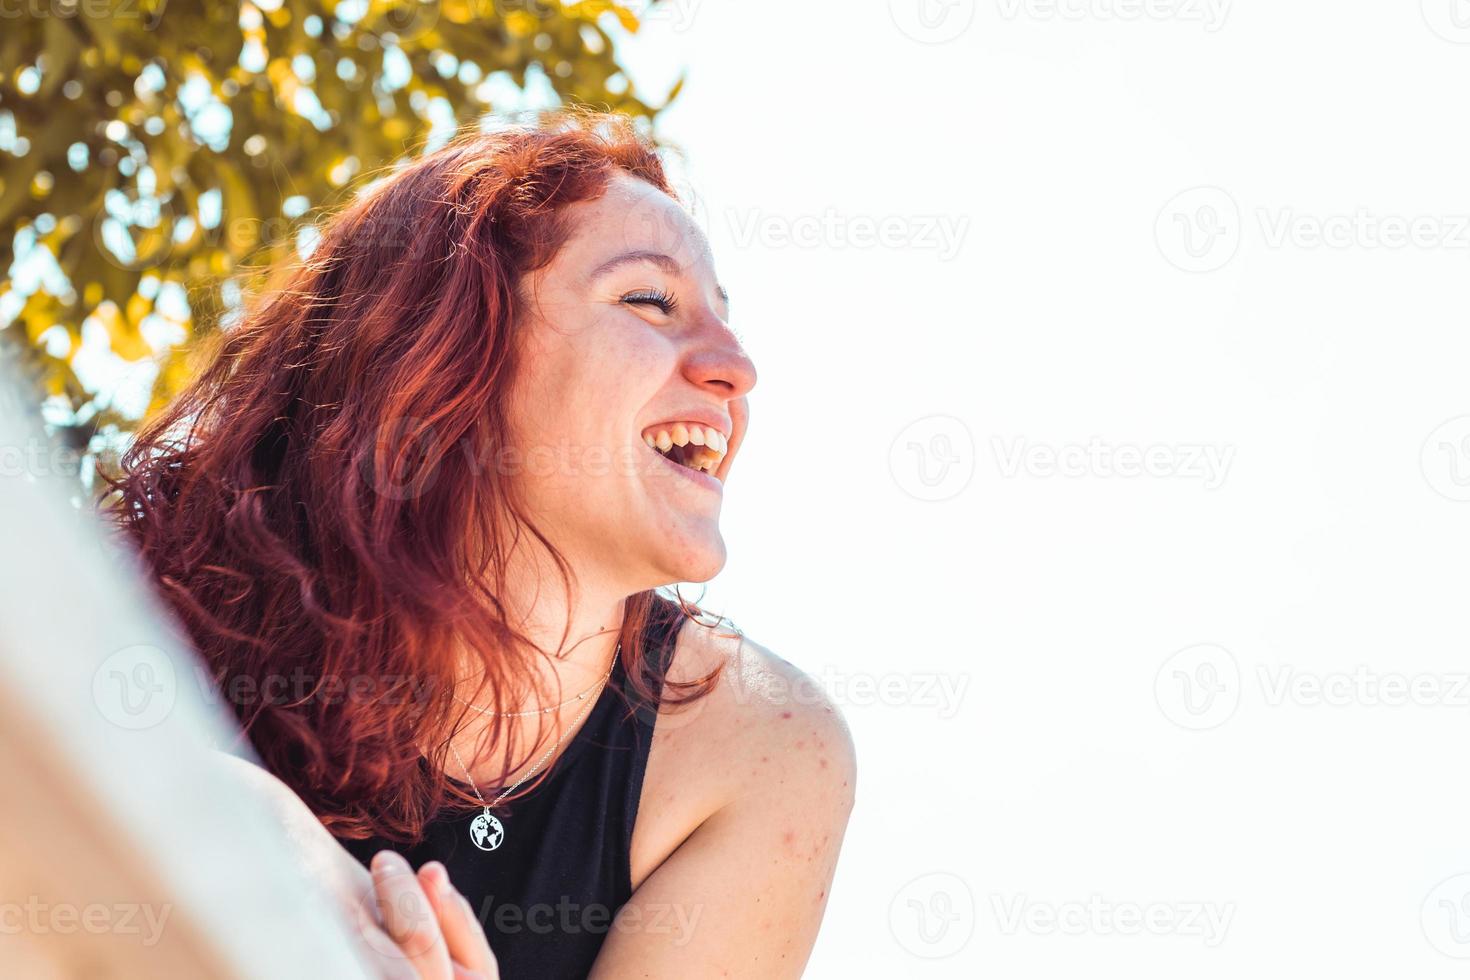 gelukkig roodharig meisje in een park, close-up shot foto